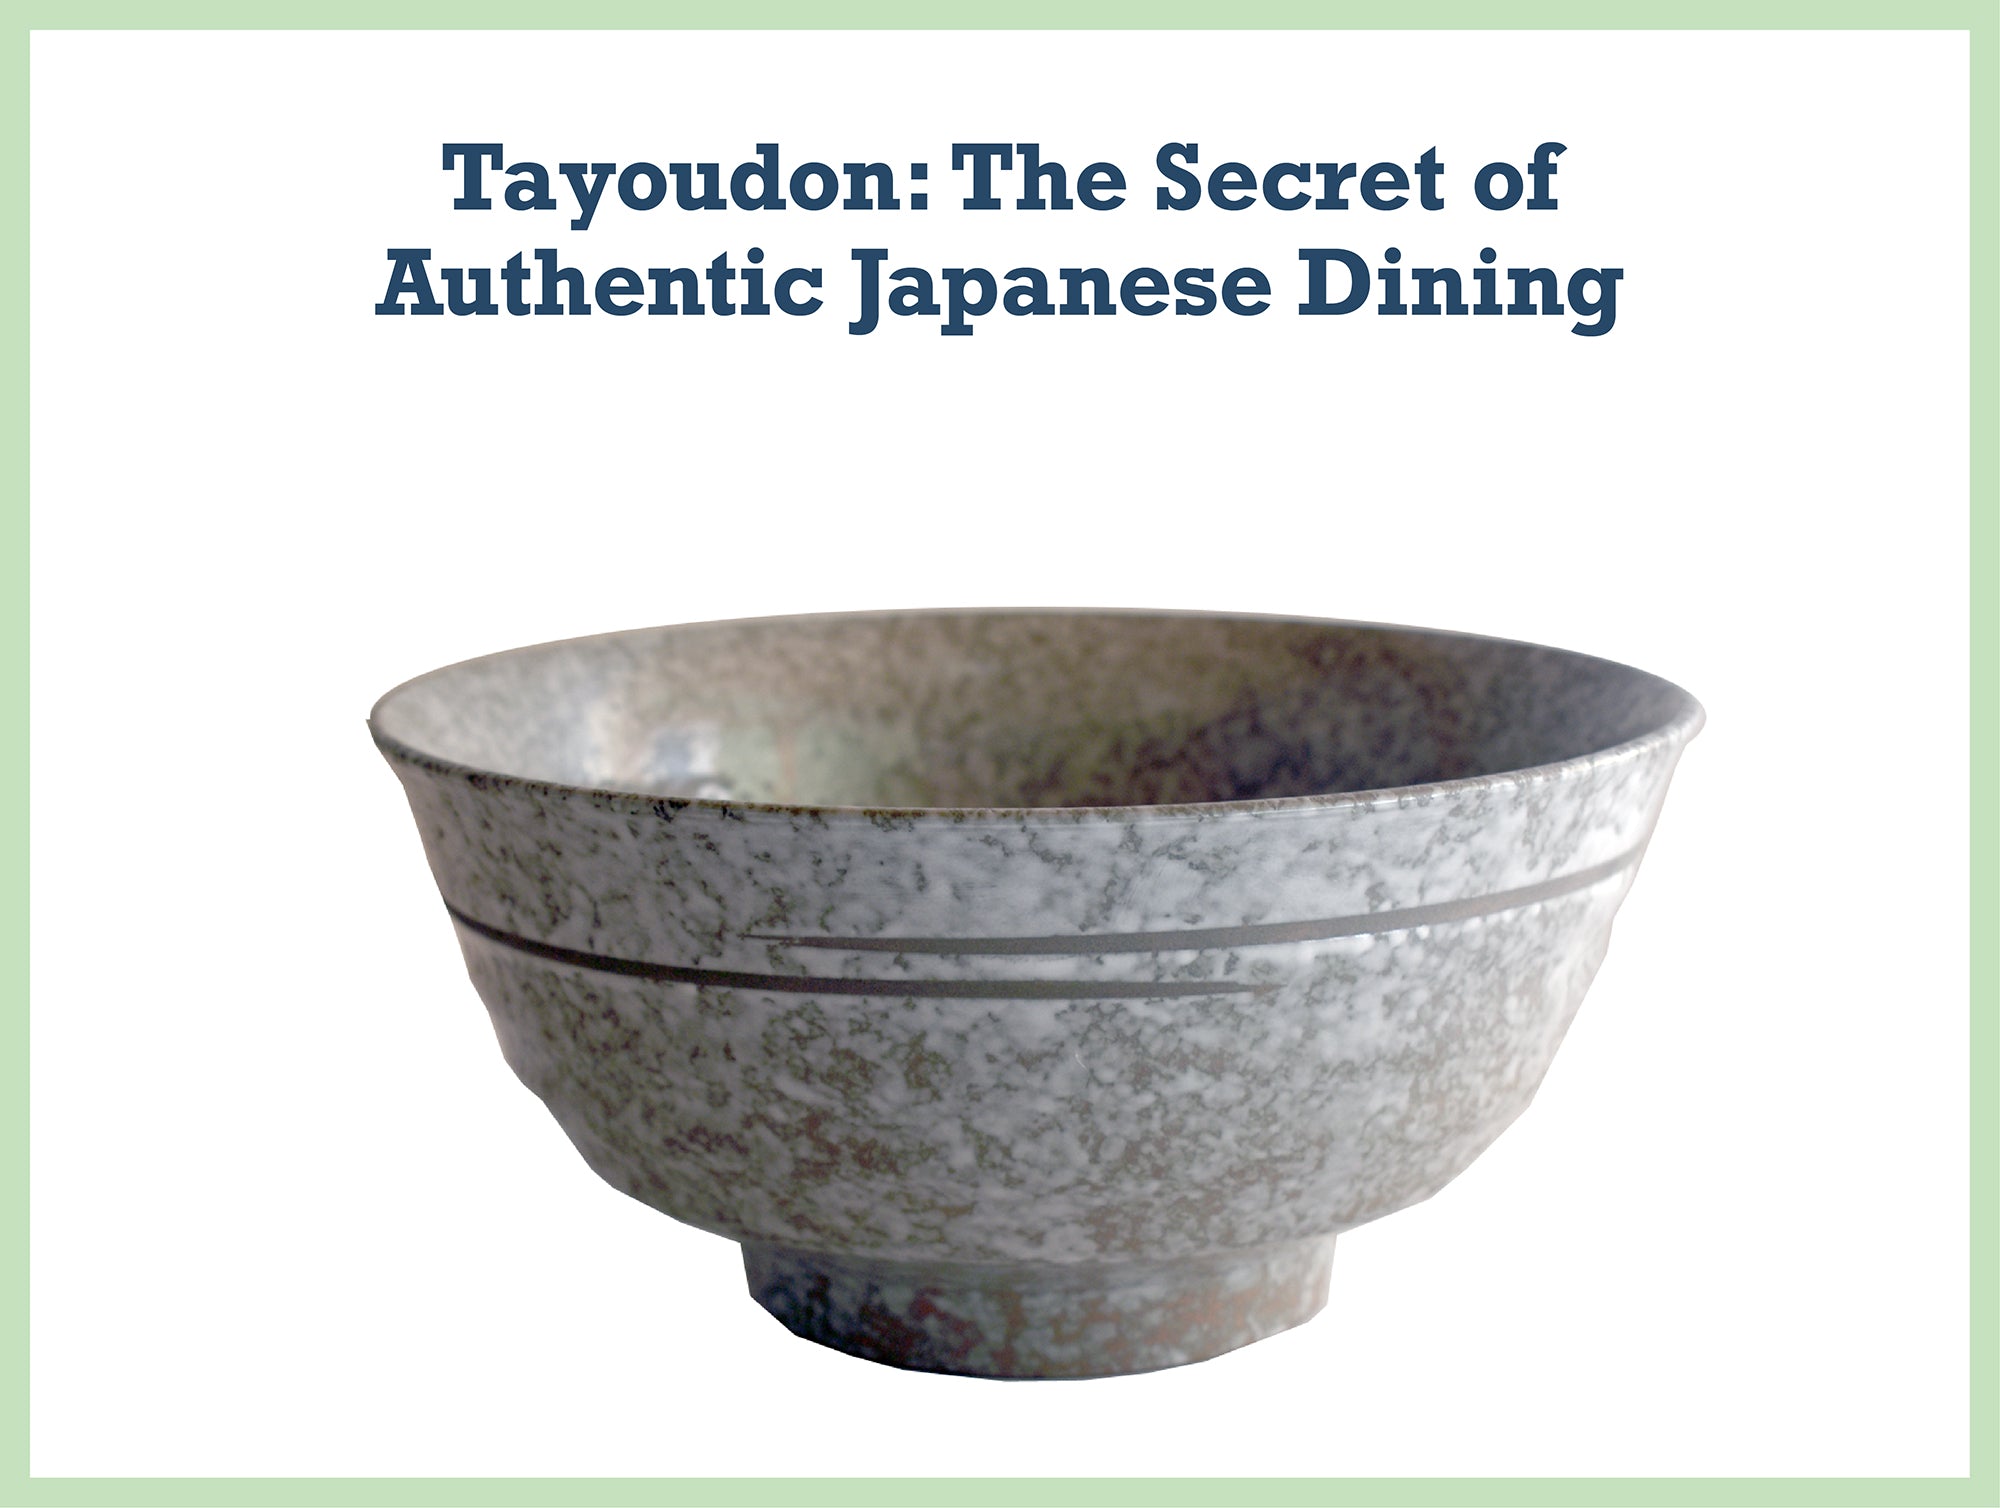 Tayoudon: The Secret of Authentic Japanese Dining